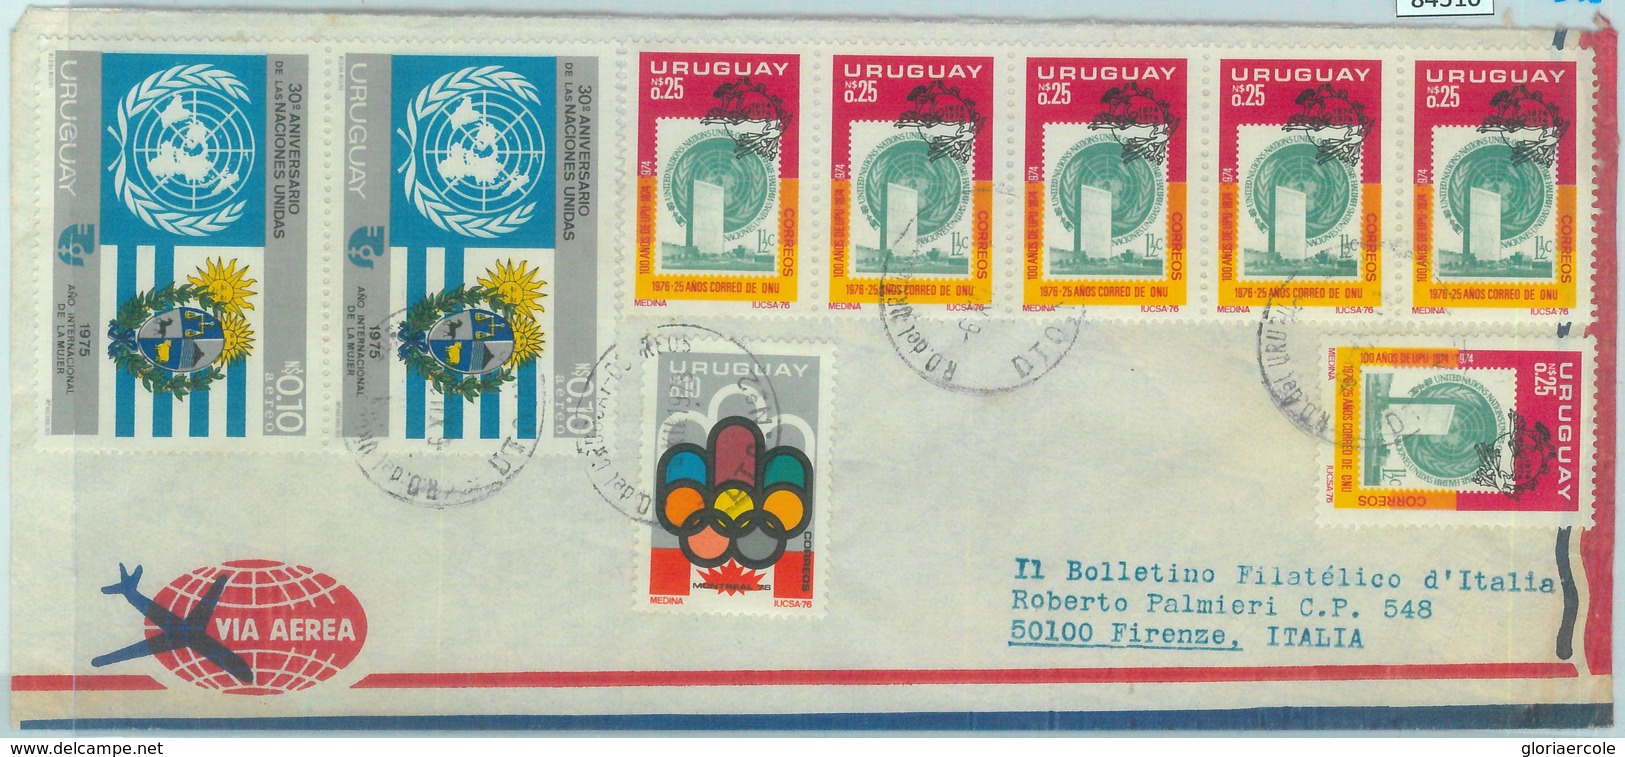 84310 - URUGUAY - Postal History -  COVER To ITALY 1978    UPU Olympic Games - Uruguay